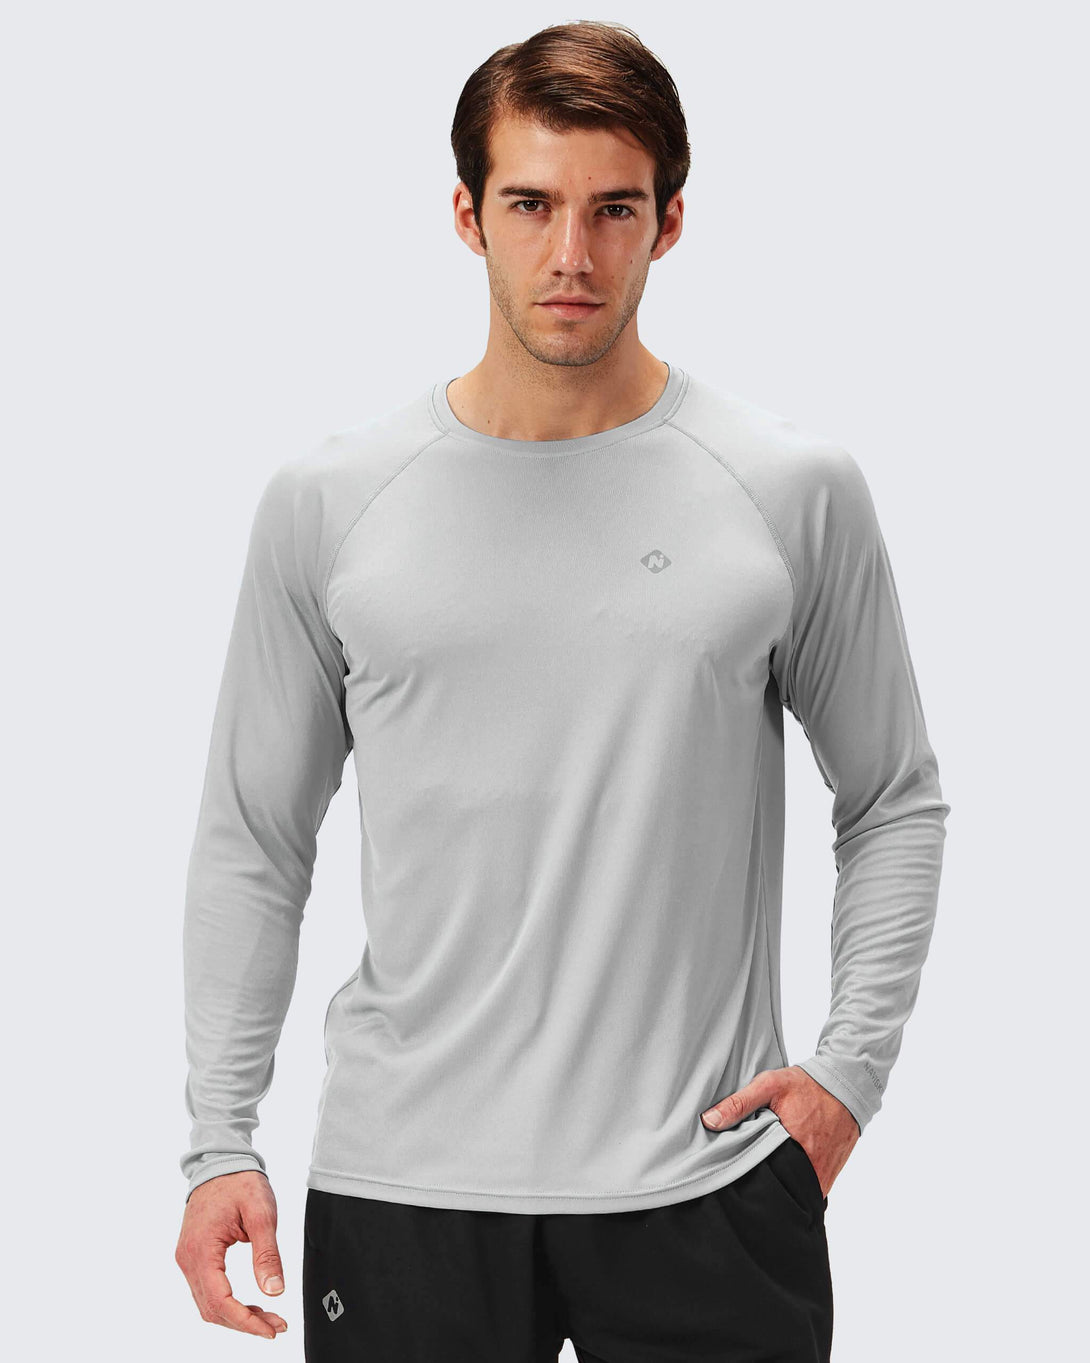 NAVISKIN Men's Quick Dry UPF 50+ Sun Protection Long Sleeve Fishing tshirt Lightweight Hiking Shirts Rash Guard Swim Shirt, Grey / X-Large